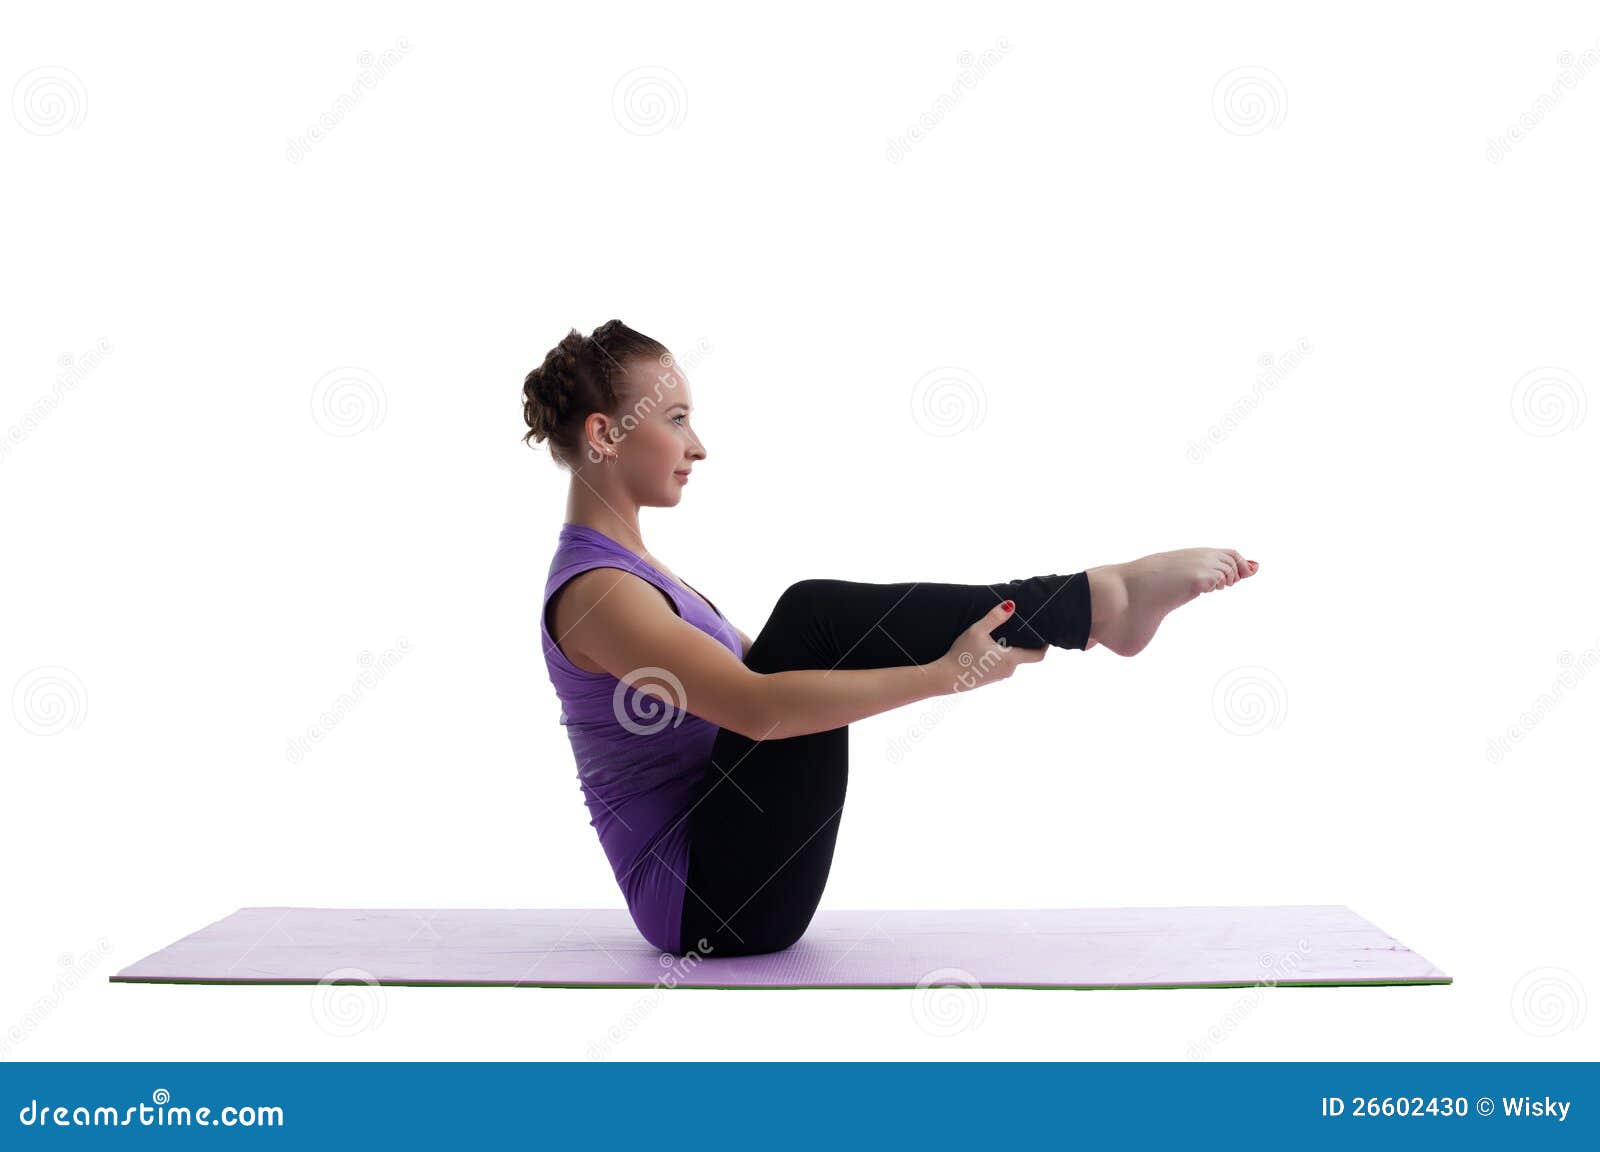 https://thumbs.dreamstime.com/z/woman-sit-yoga-asana-rubber-mat-isolated-26602430.jpg